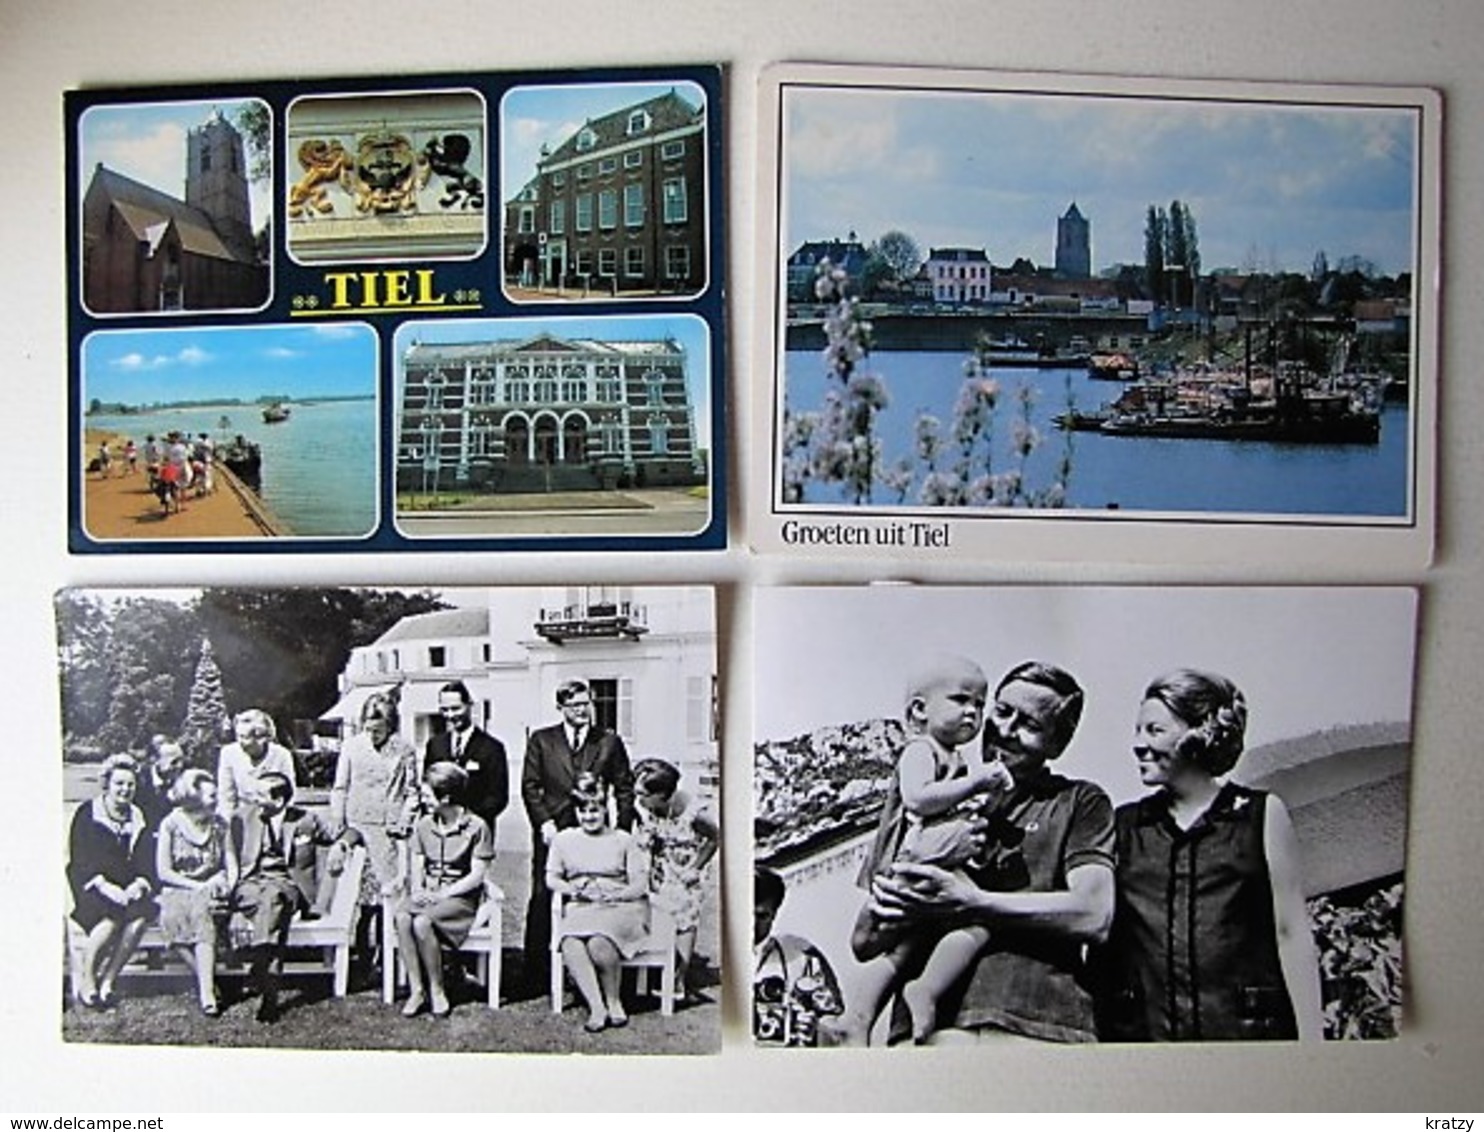 HOLLAND - Lot 70 - Lot de 100 cartes postales différentes